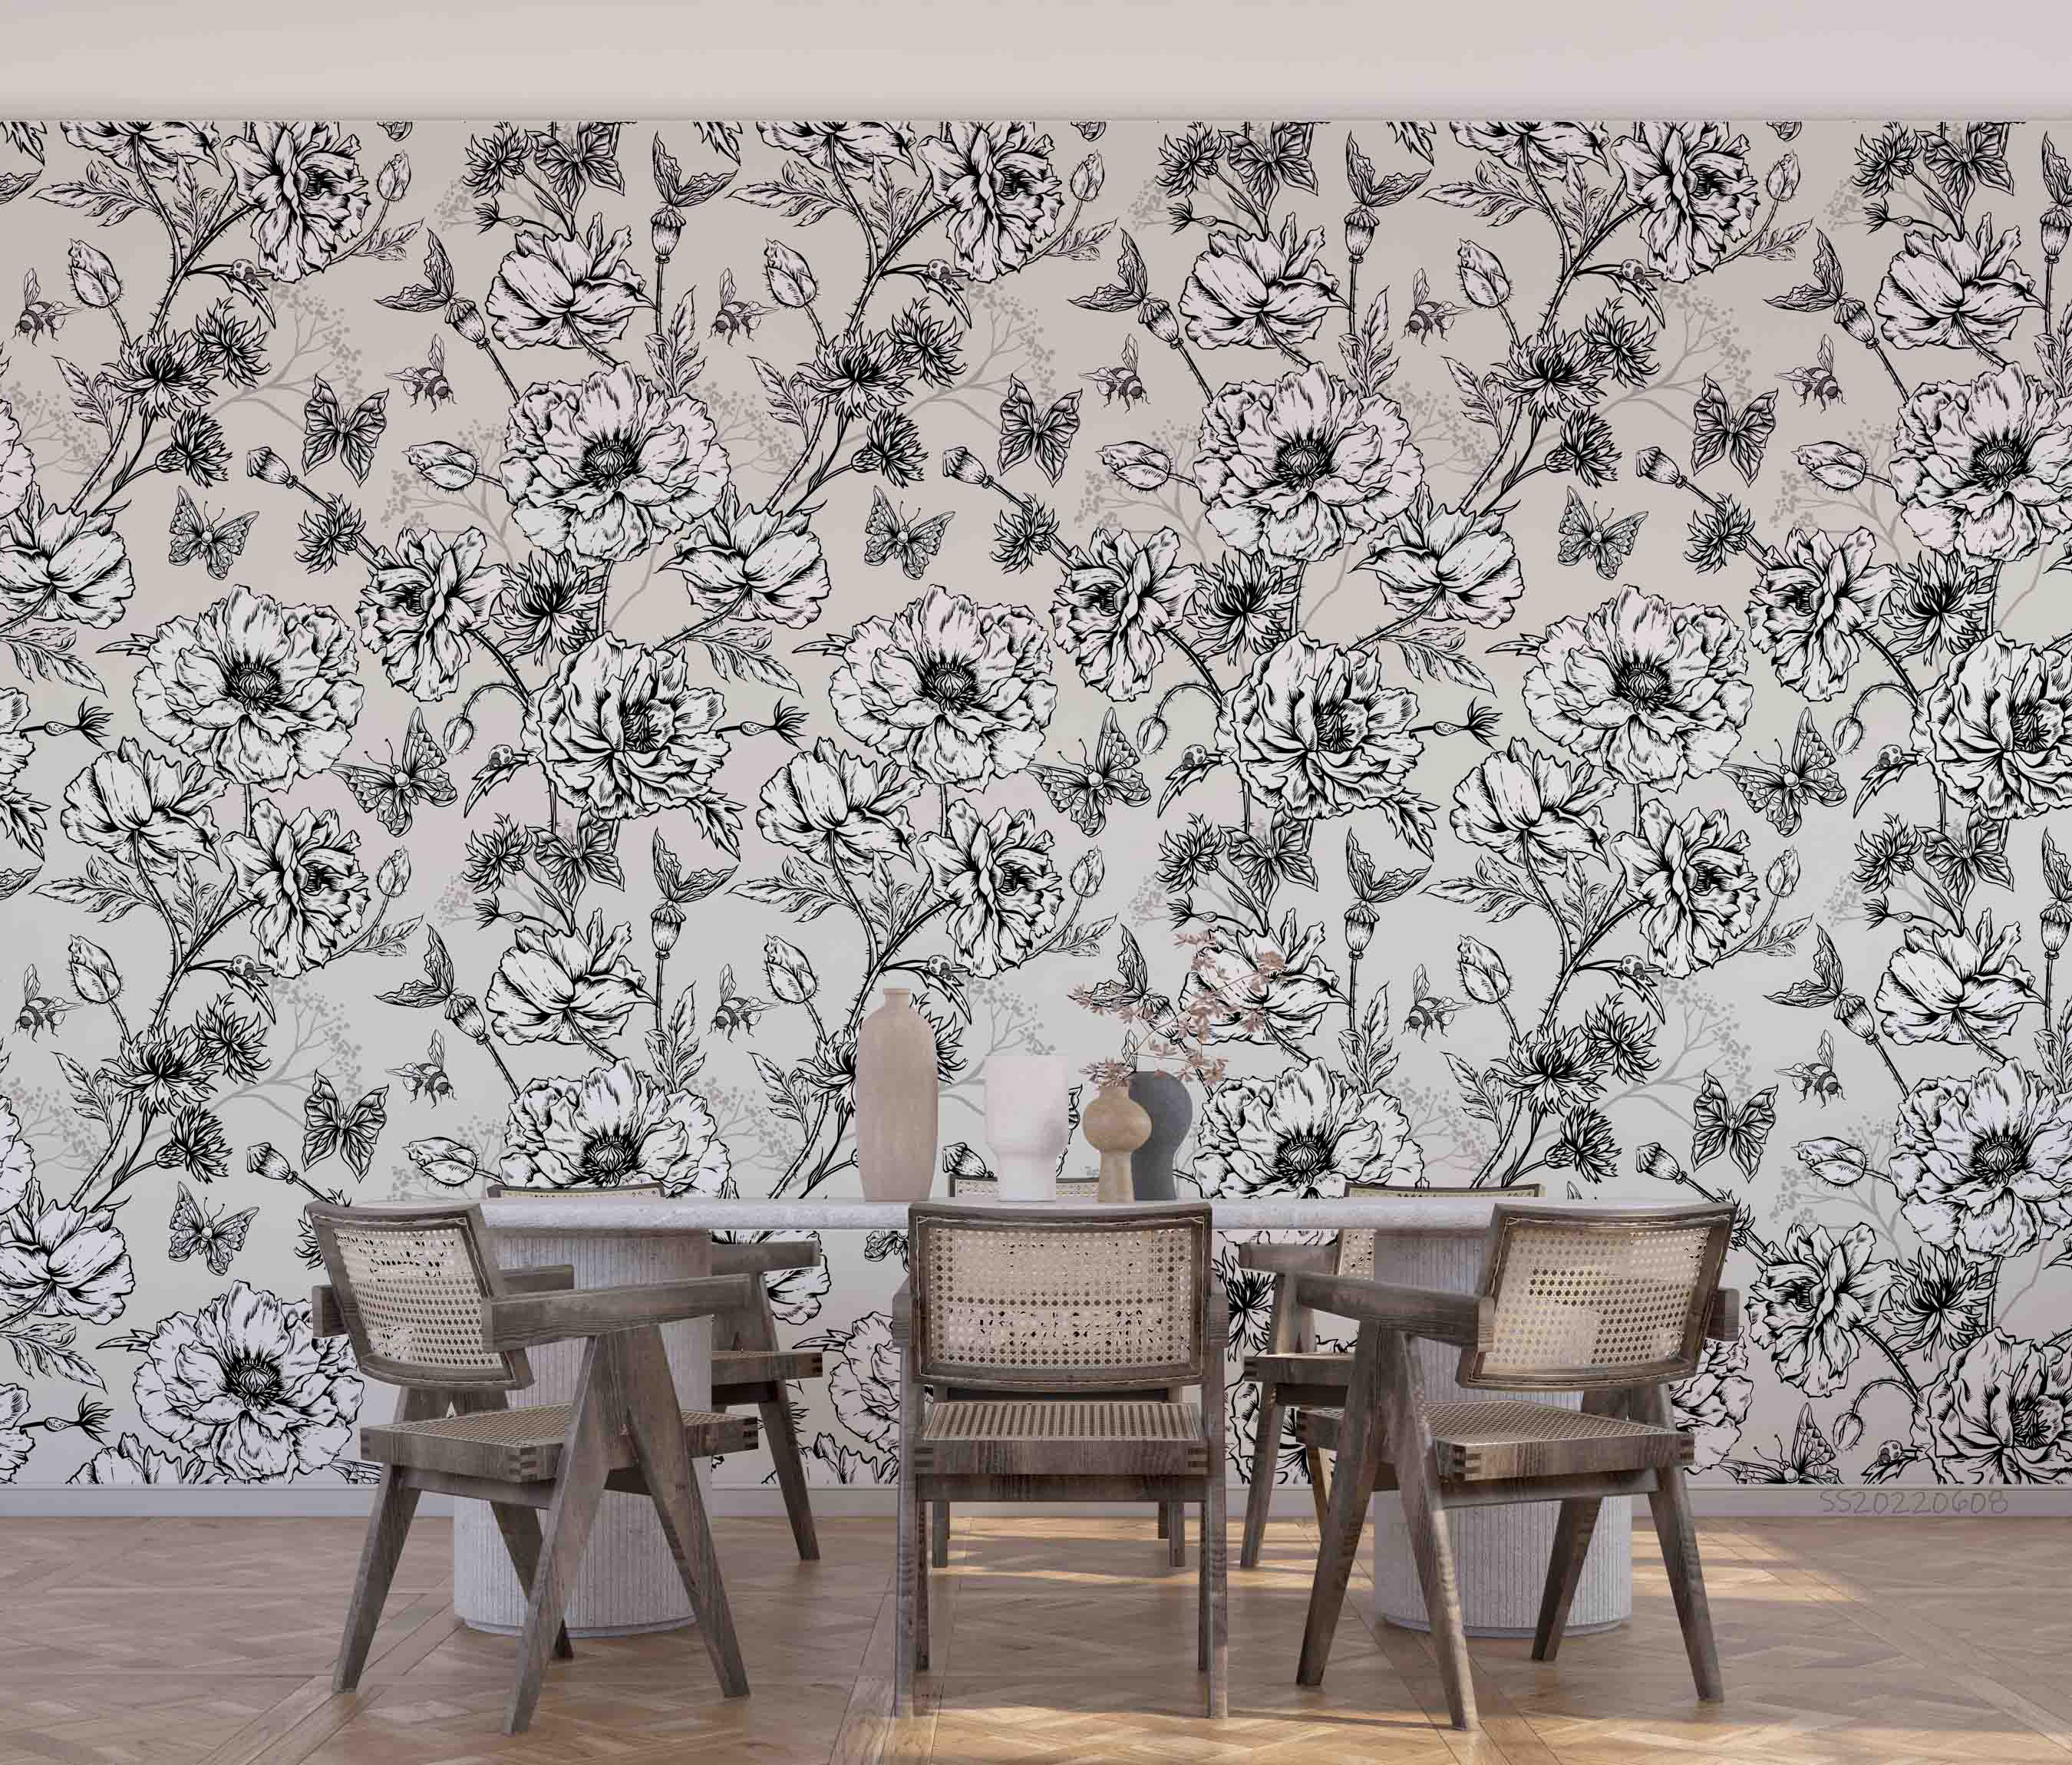 3D Vintage Floral Butterfly Pattern Wall Mural Wallpaper GD 599- Jess Art Decoration